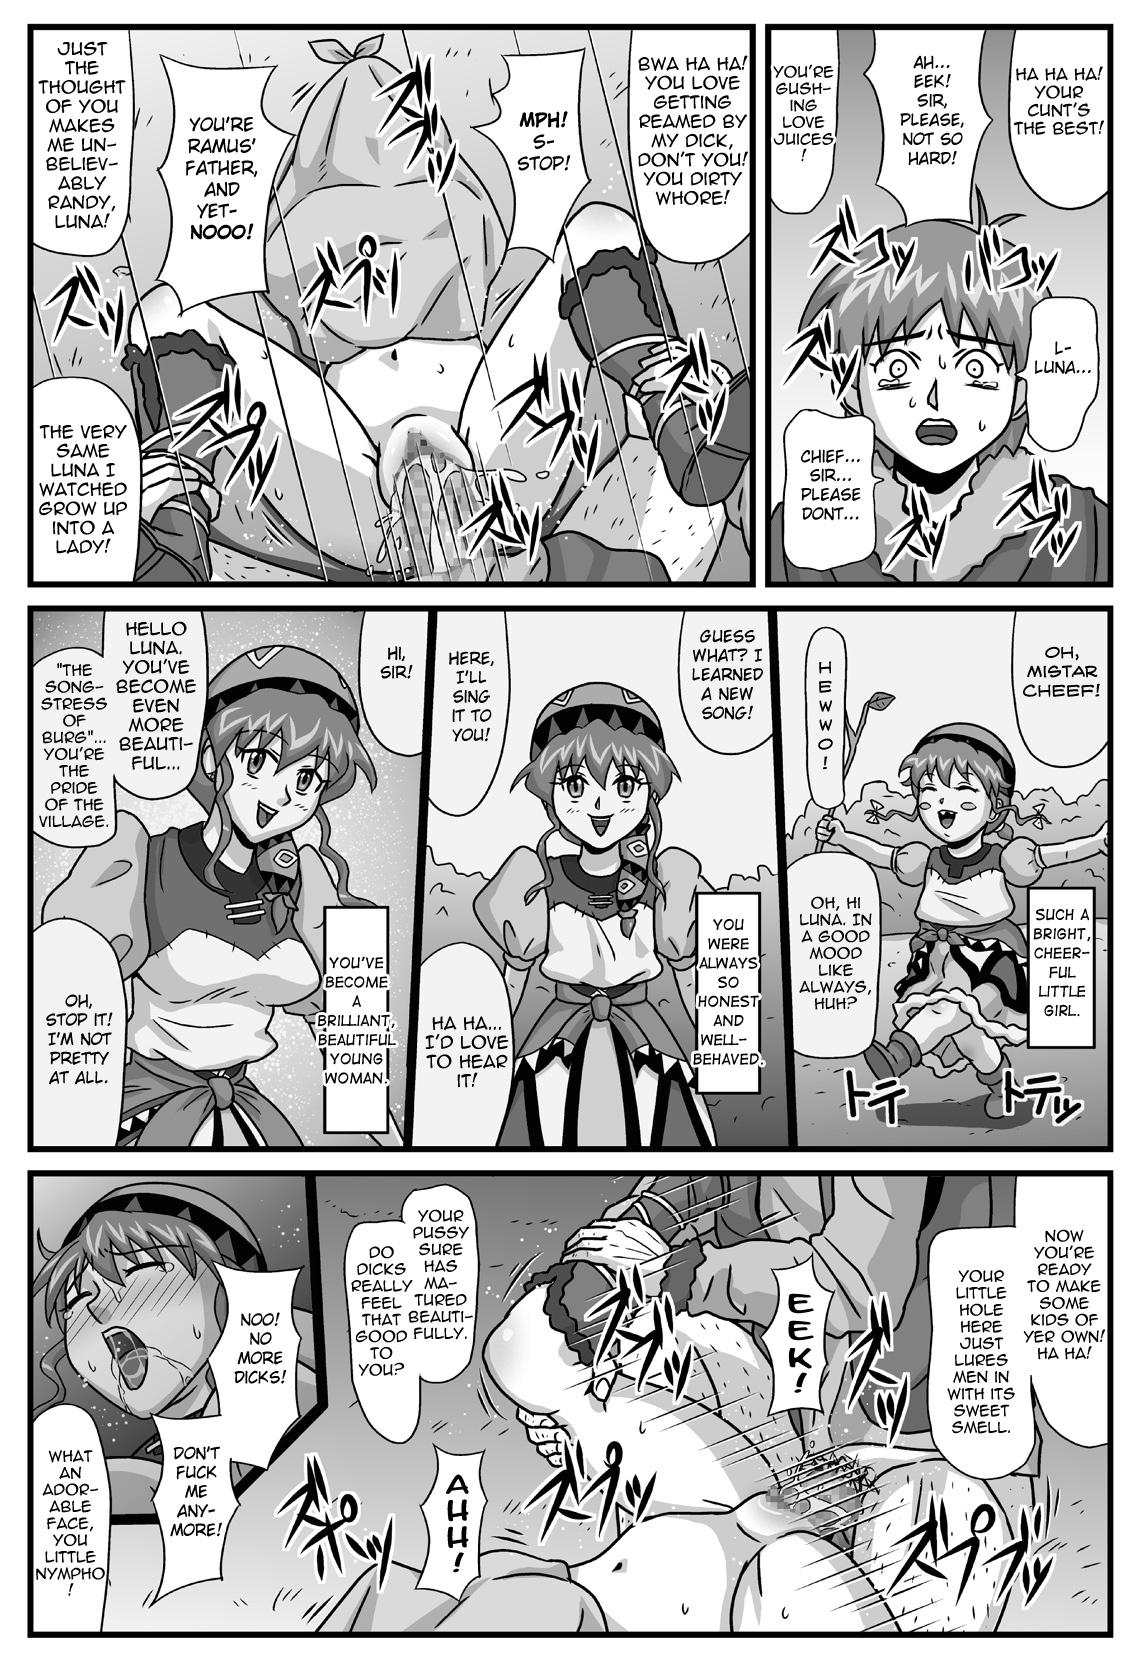 Chibola The Cumdumpster Princess of Burg 02 - Lunar silver star story Blow Job - Page 9